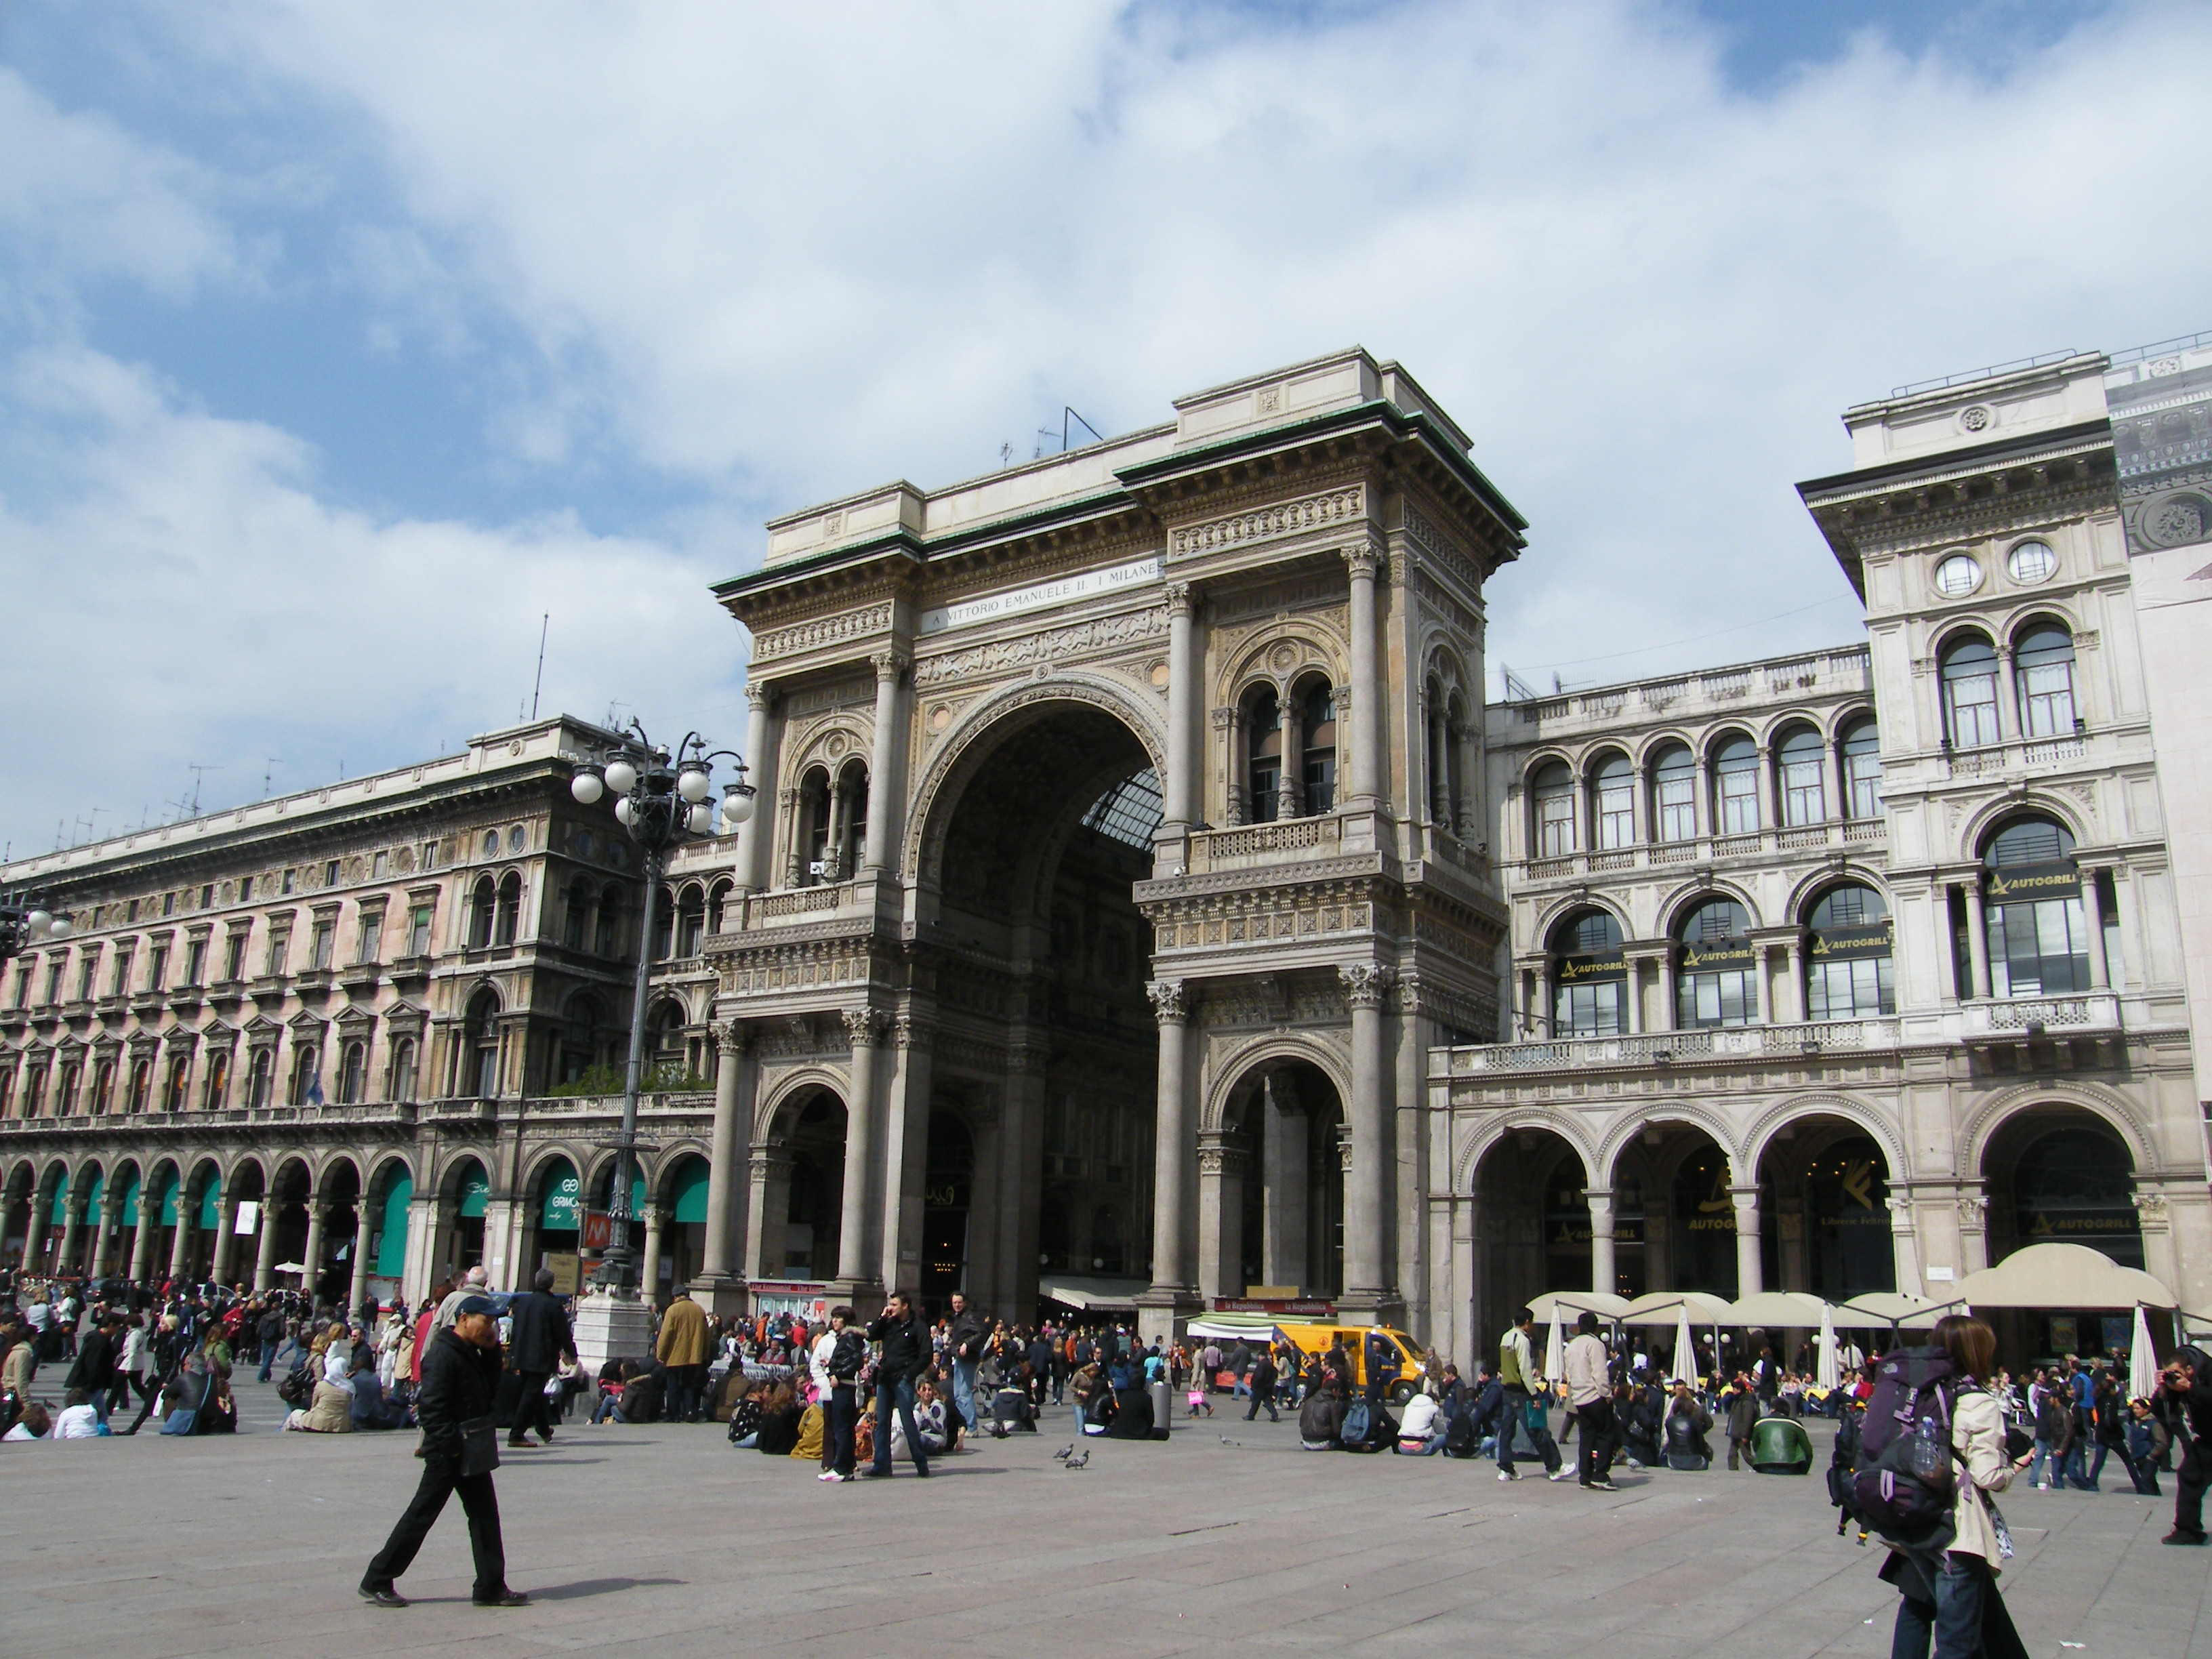 File:Galleria Vittorio Emanuele II in Milan.JPG - Wikimedia Commons